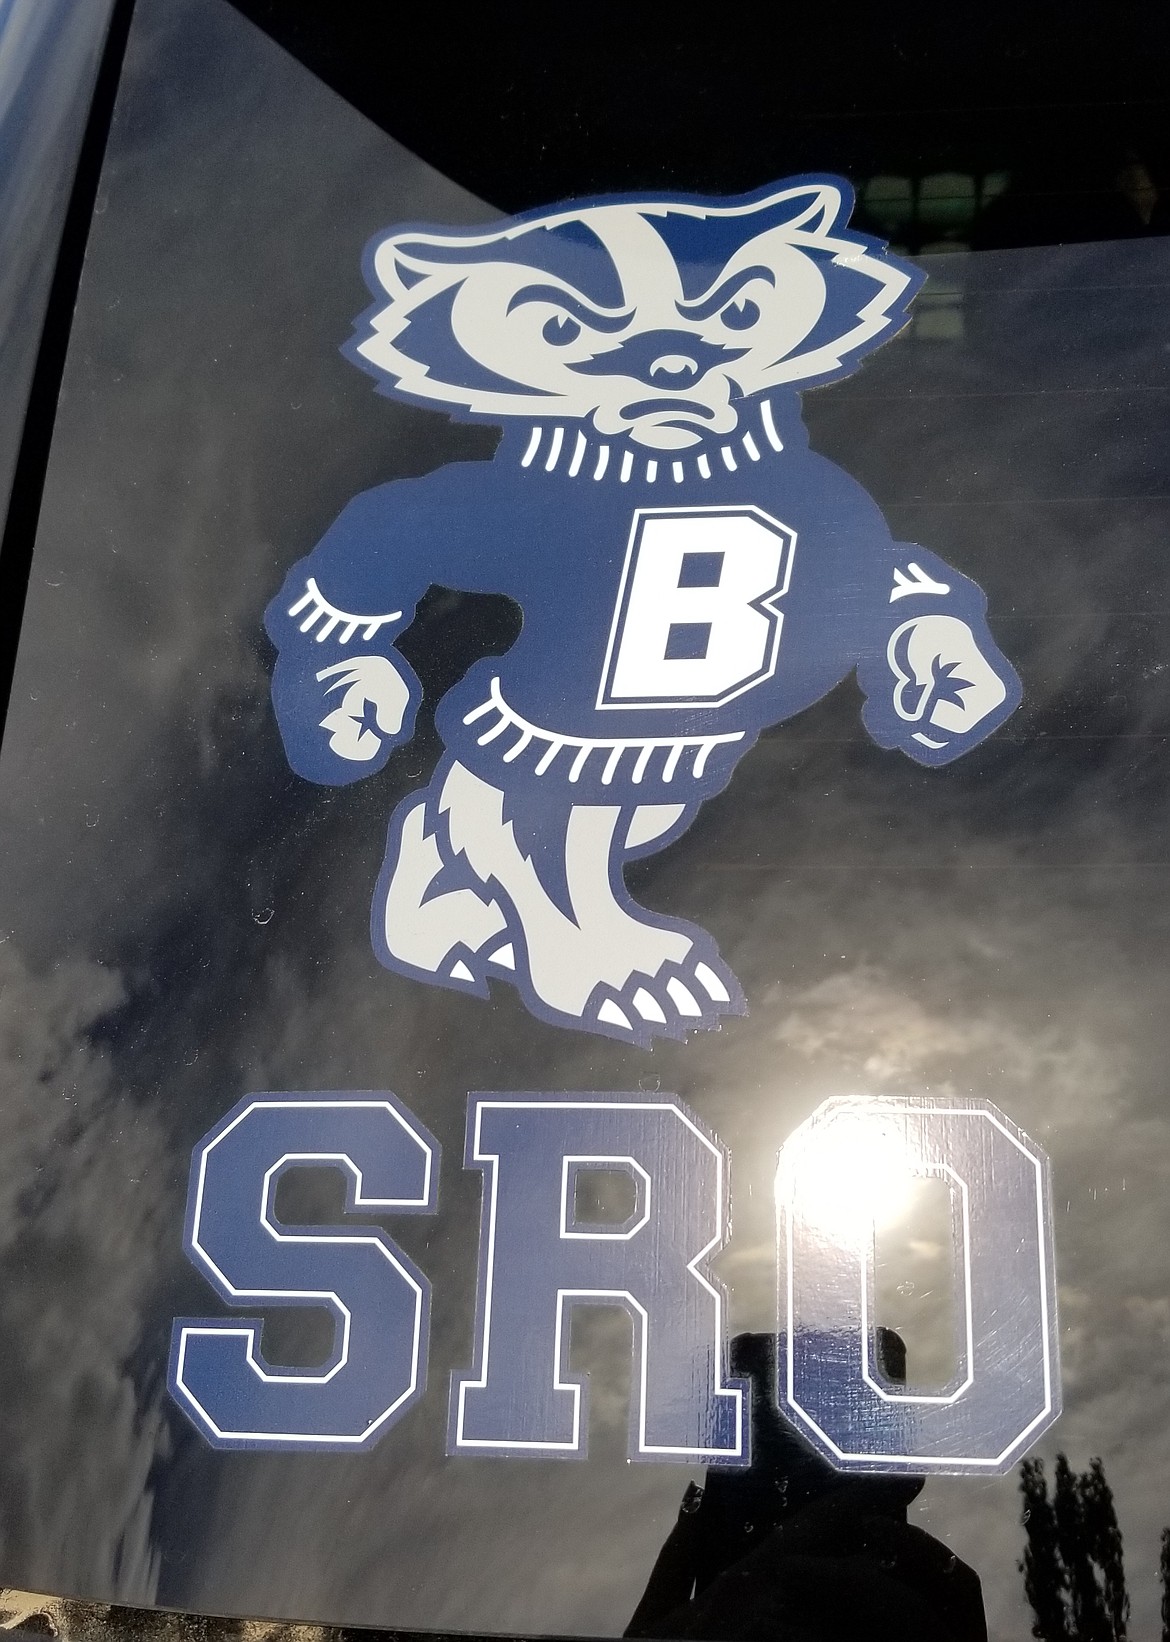 Photo by MANDI BATEMAN
There are three Badger logos on the SRO patrol vehicle.